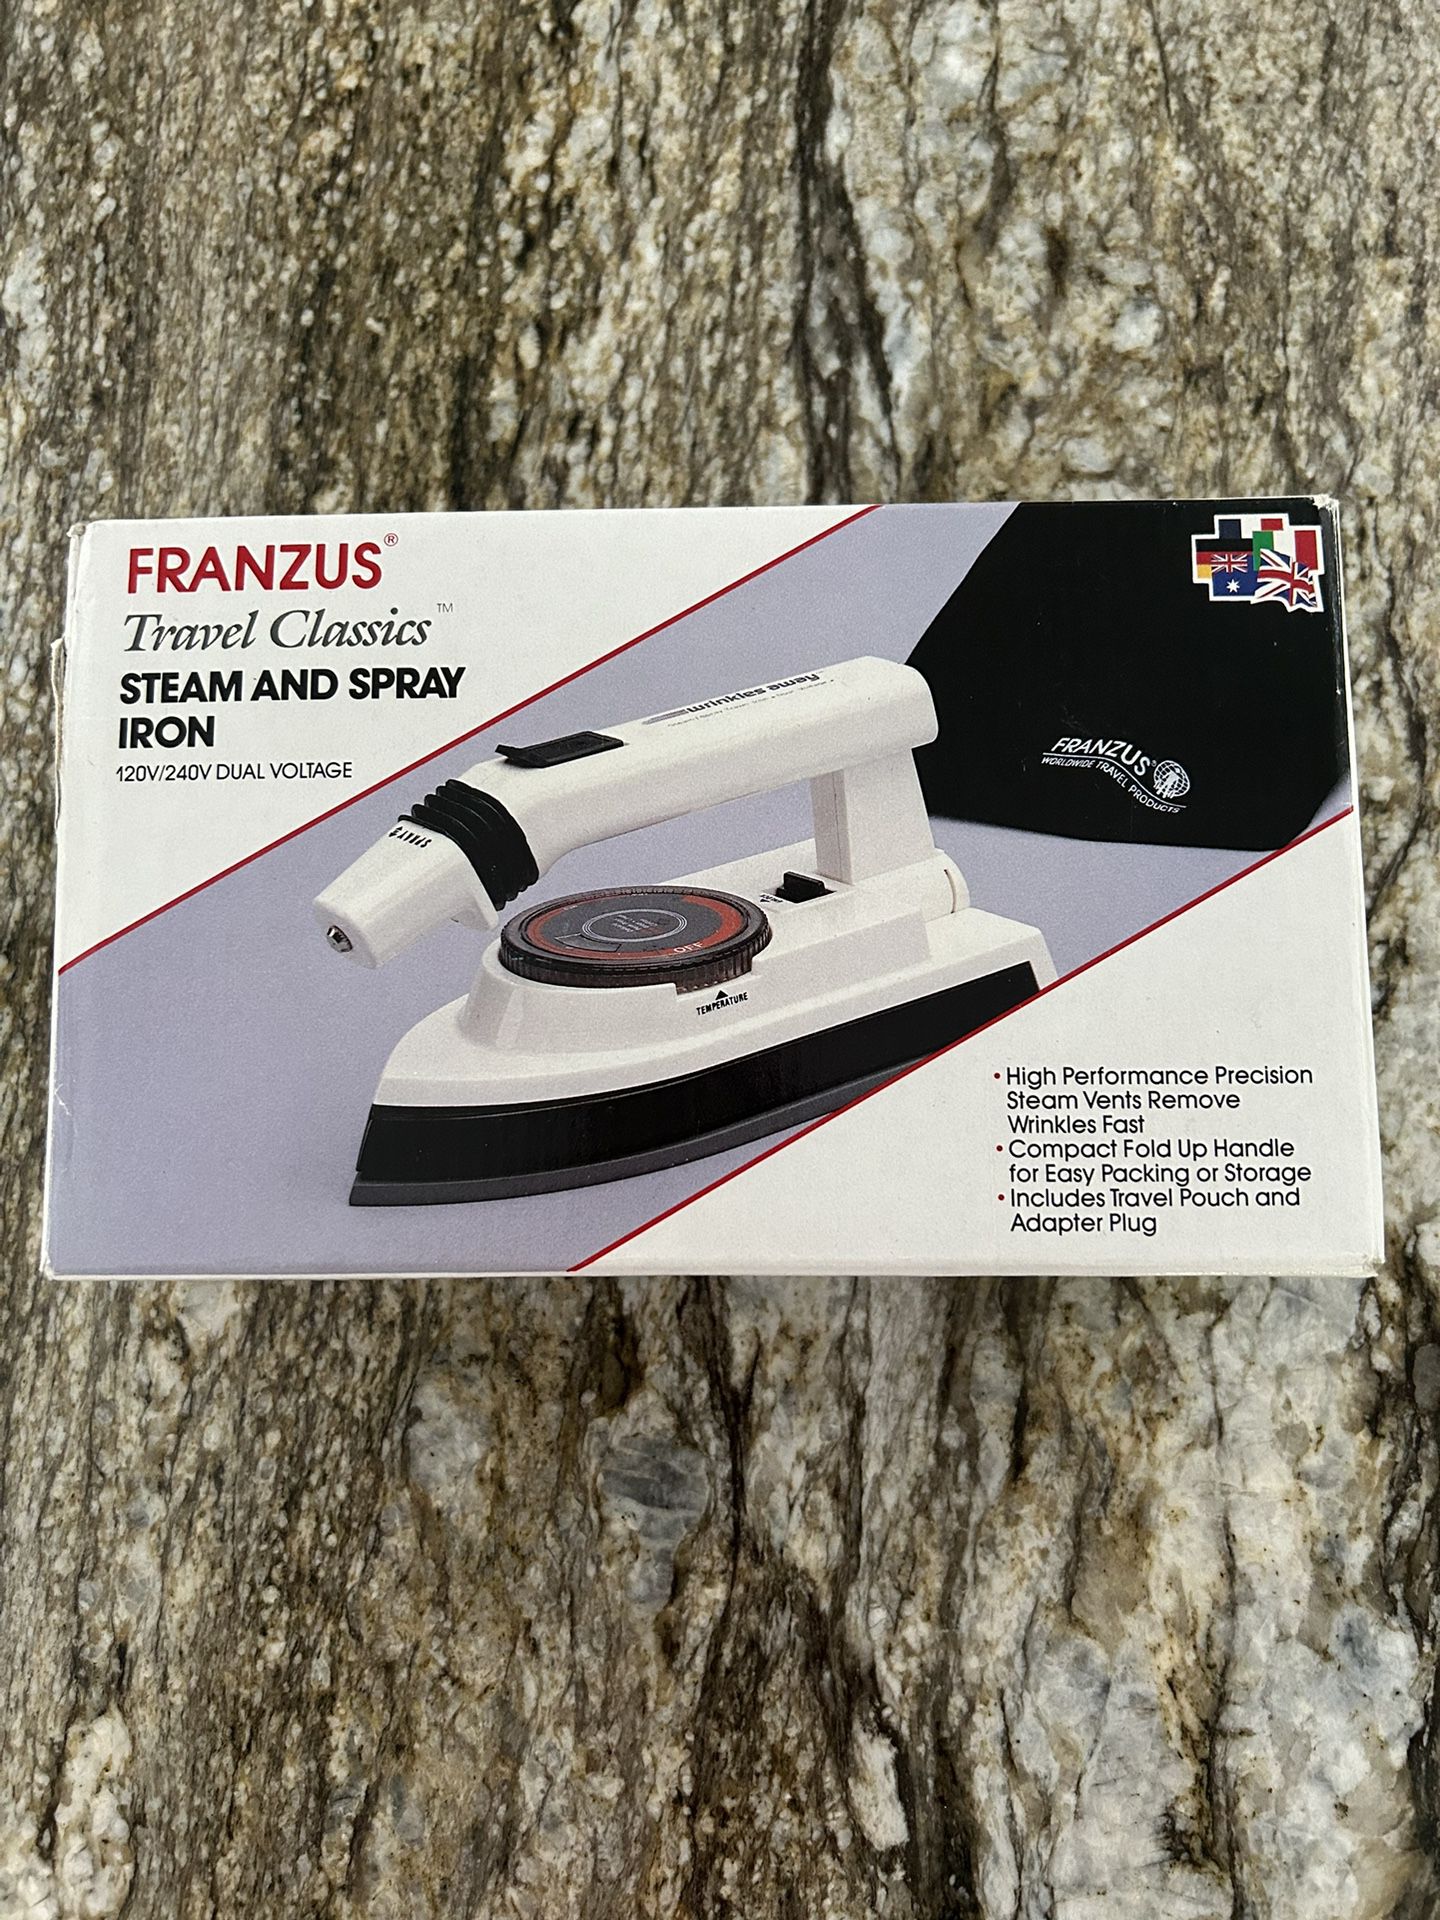 FRANZUS Travel Classics Steam and Spray Iron